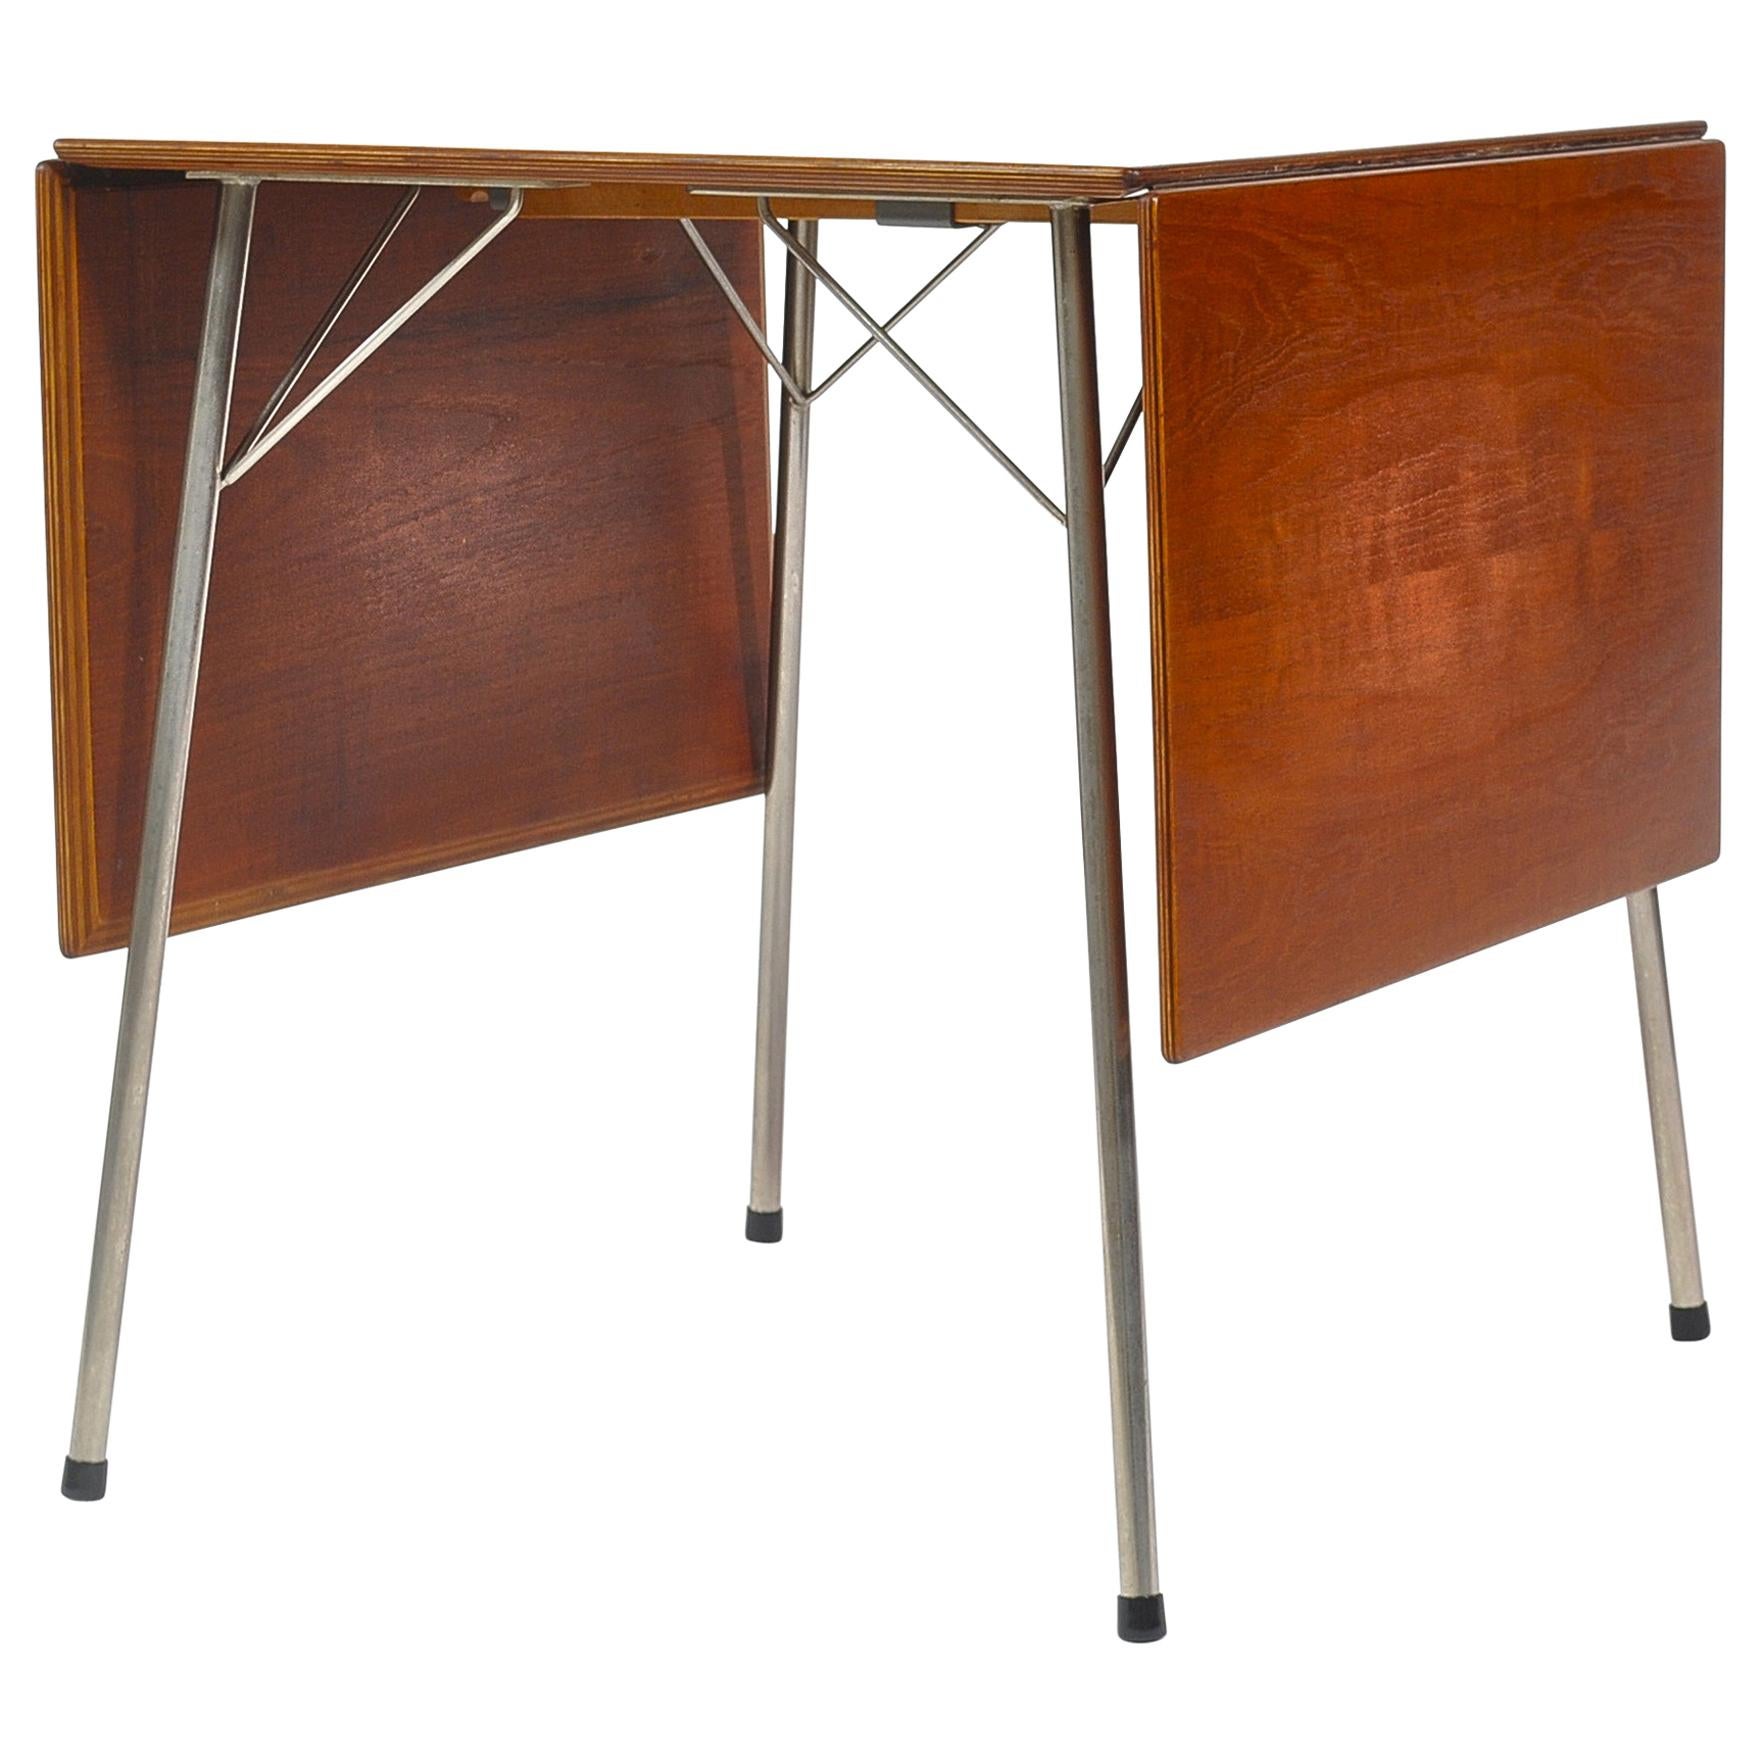 Arne Jacobsen Danish Modern Drop-Leaf Table Model "AJ-3601", Fritz Hansen, 1950s